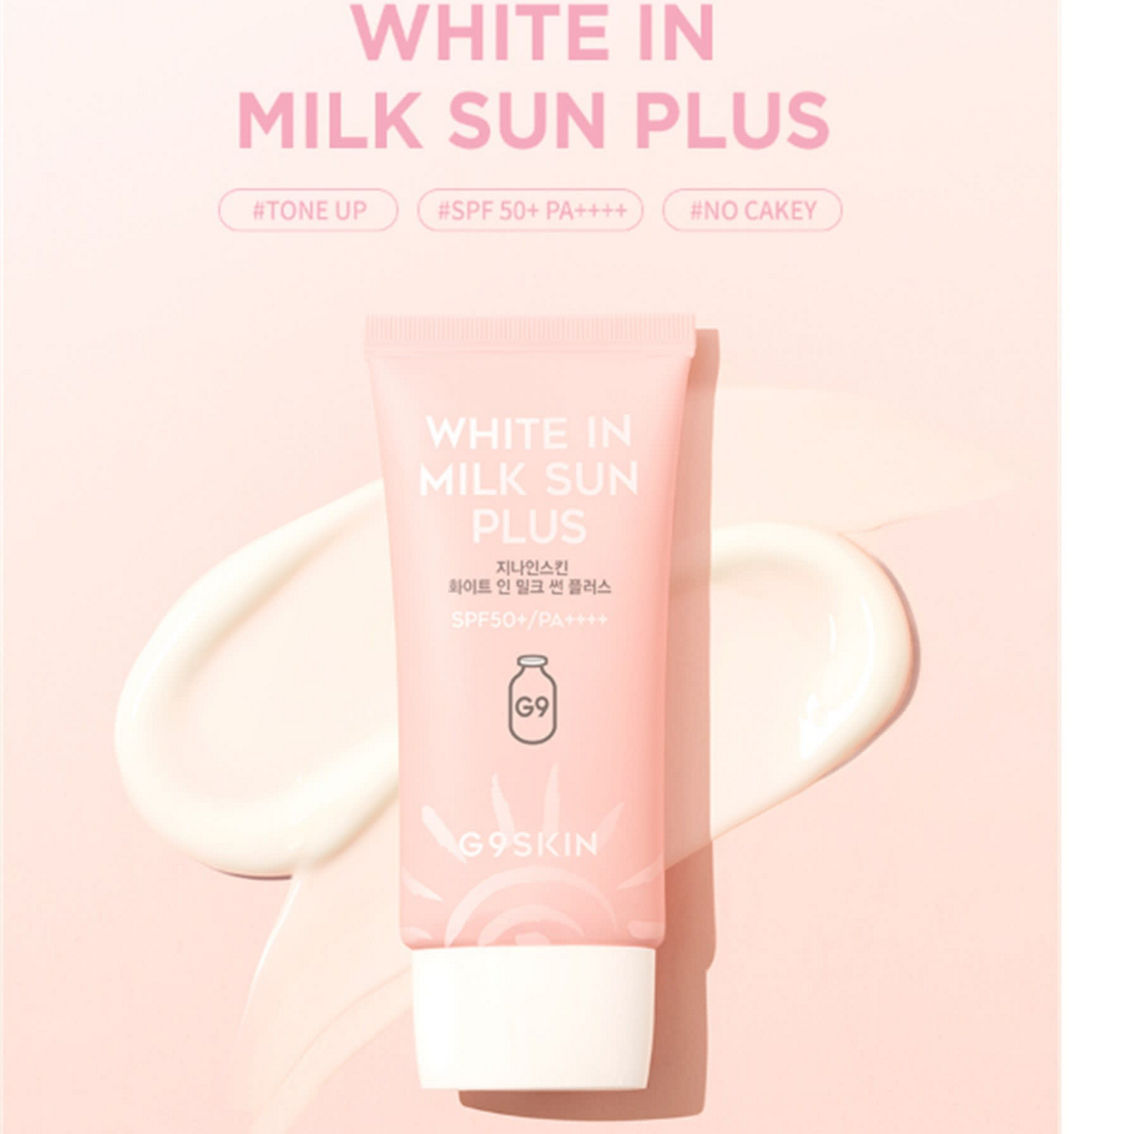 G9SKIN White In Milk Sun Plus SPF50+ PA++++ 40 ml - Image 2 of 5